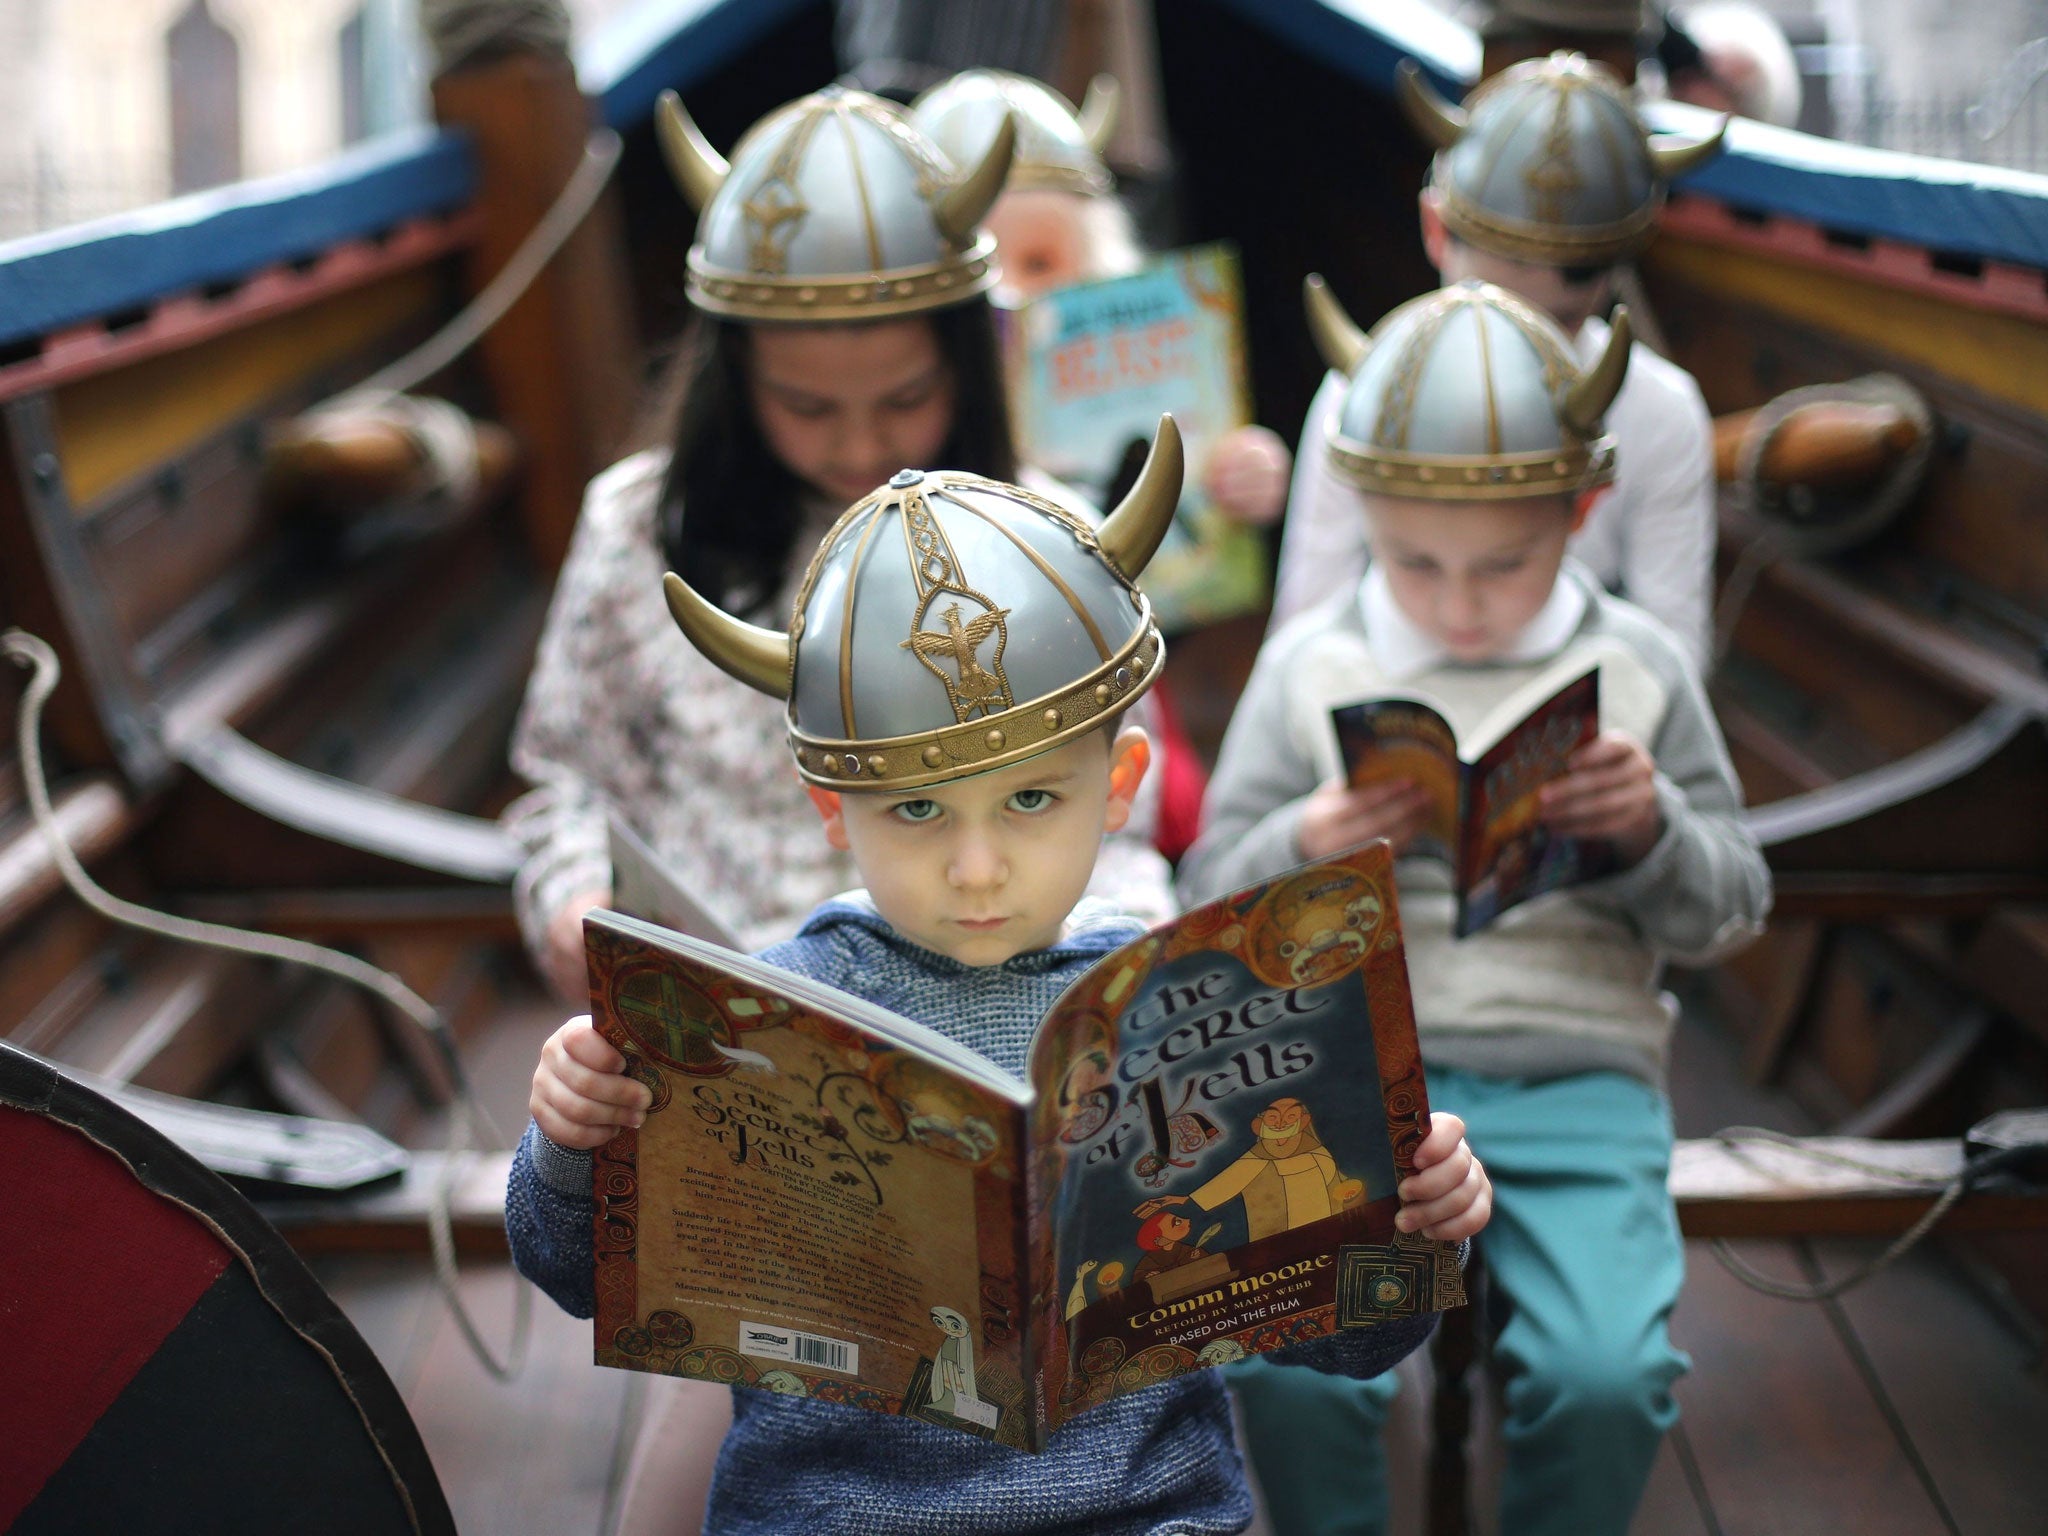 Children dress up to celebrate World Book Day.